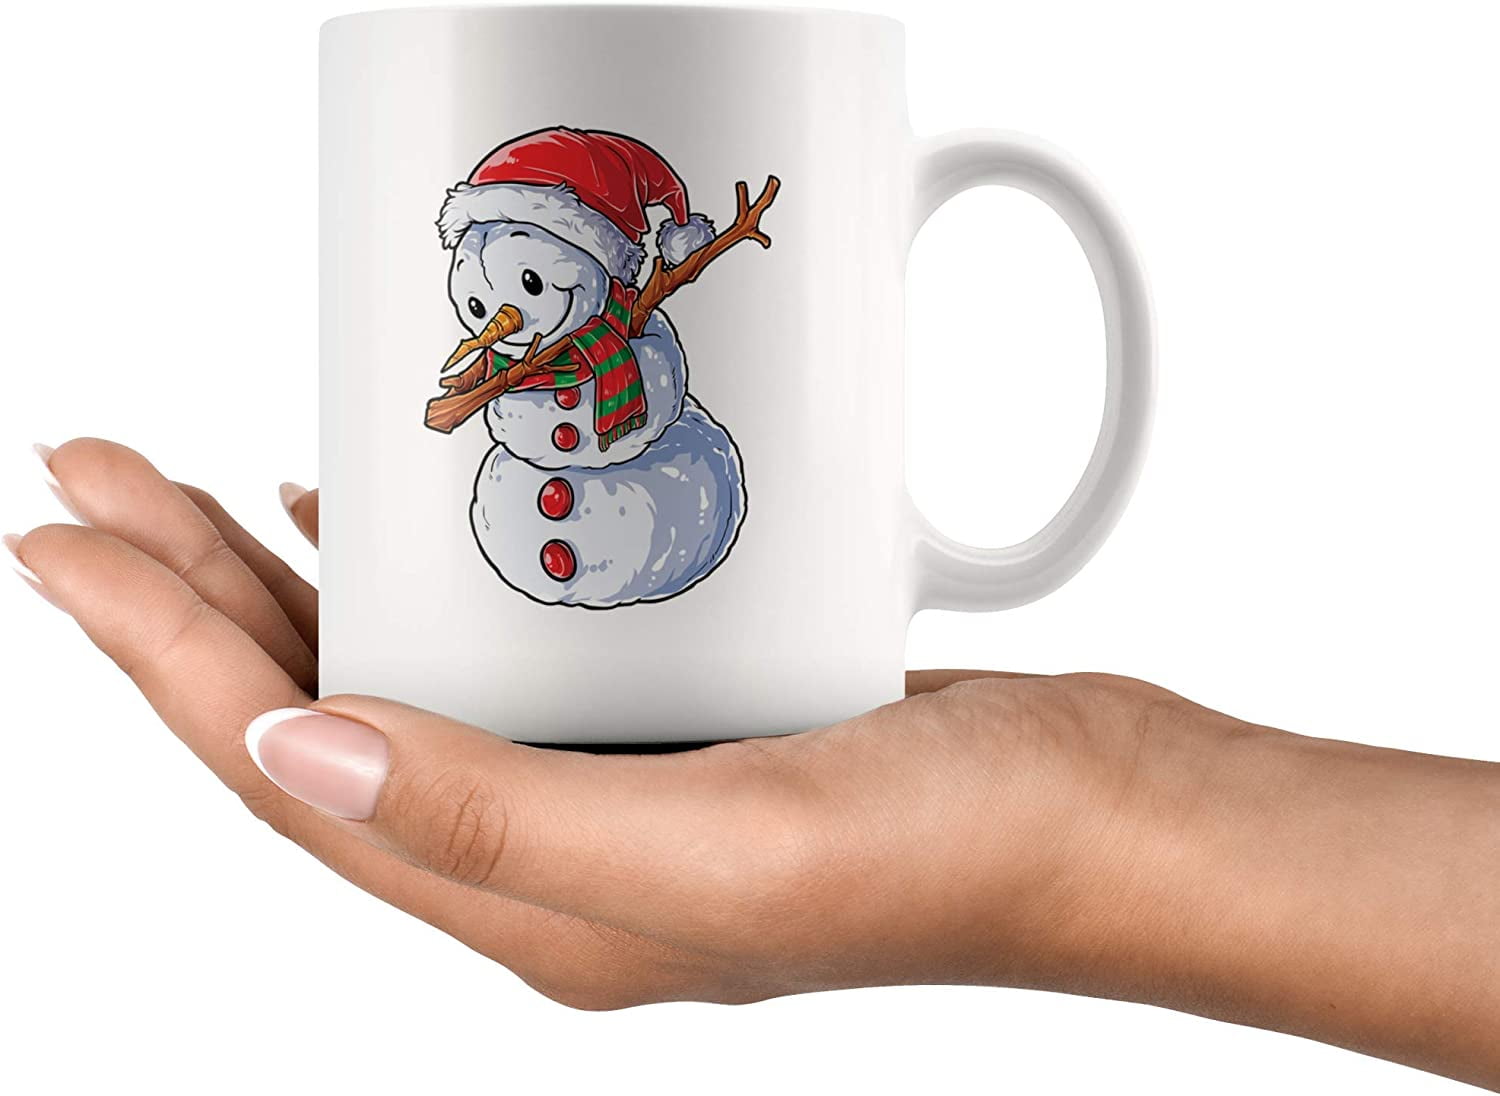  Maxdot 240 Pcs Christmas Snack Cups 8oz Santa Snowman